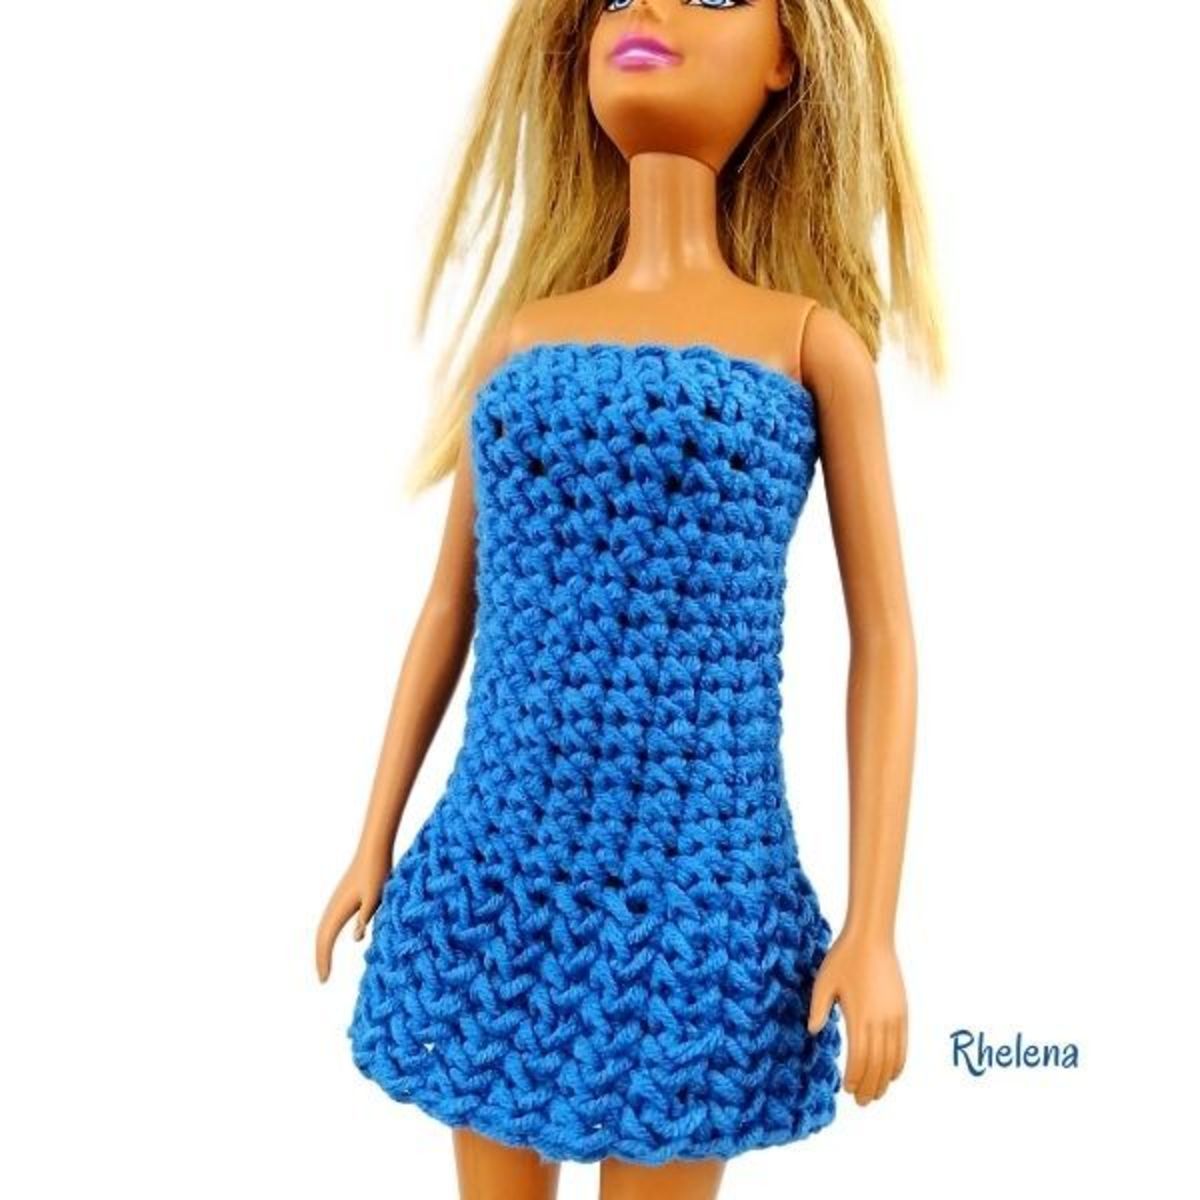 Free Barbie Crochet Patterns - HubPages